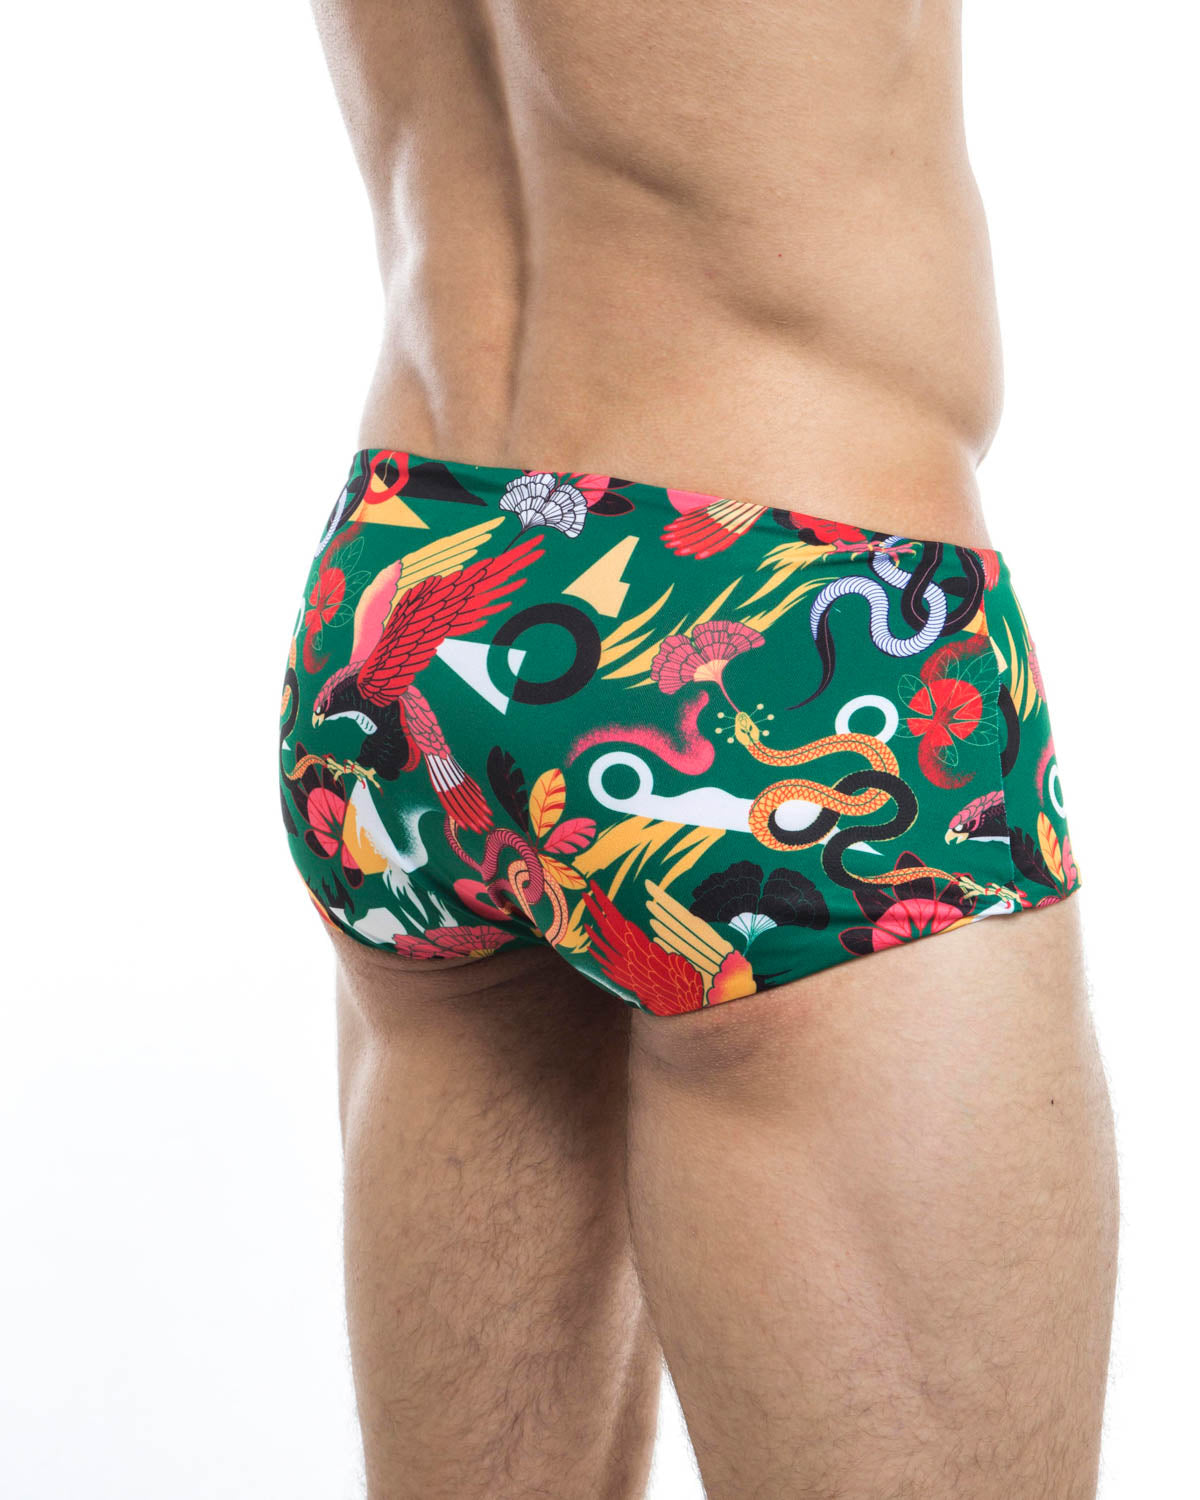 Men's swim trunks - HUNK2 Underwear Frosche Reversible Swim Trunks available at MensUnderwear.io - Image 1